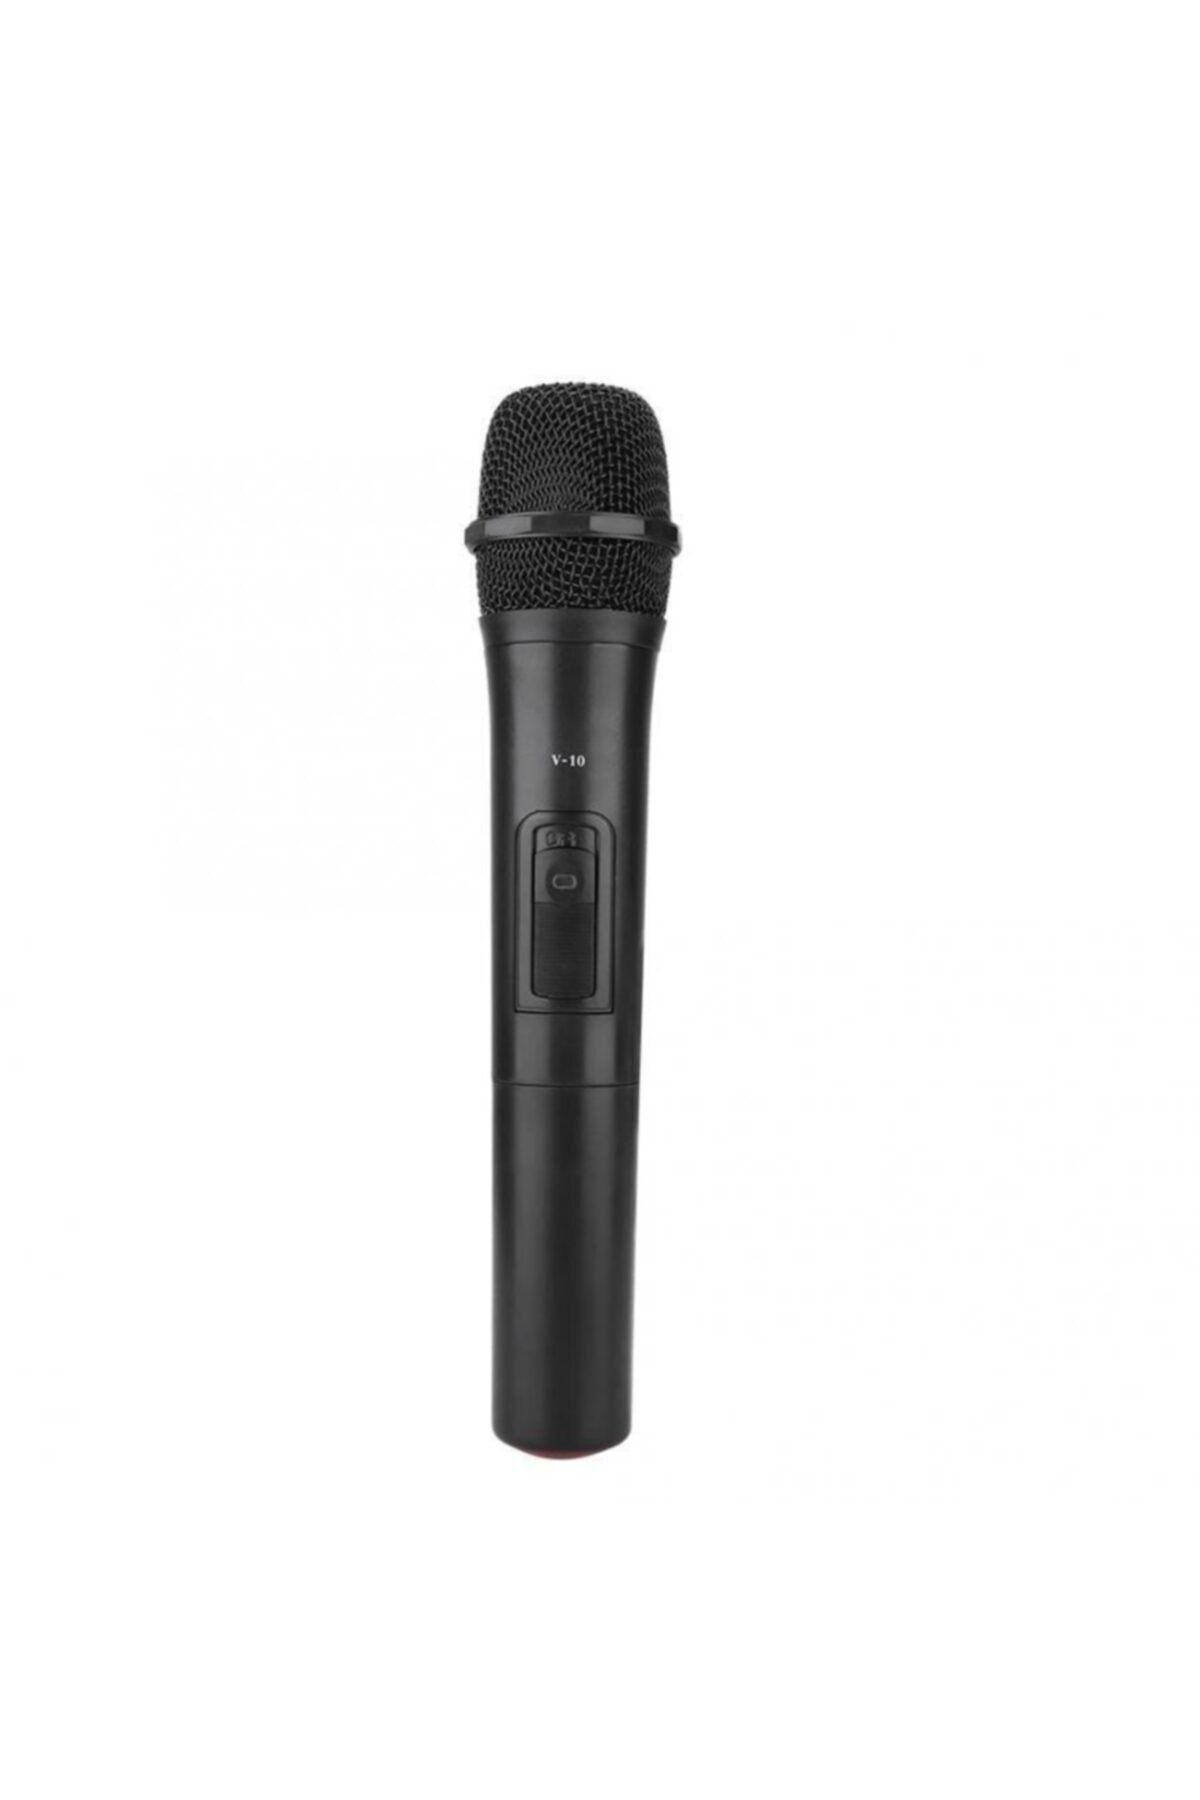 DailyTech Evrensel Vhf Profesyonel Kablosuz Mikrofon